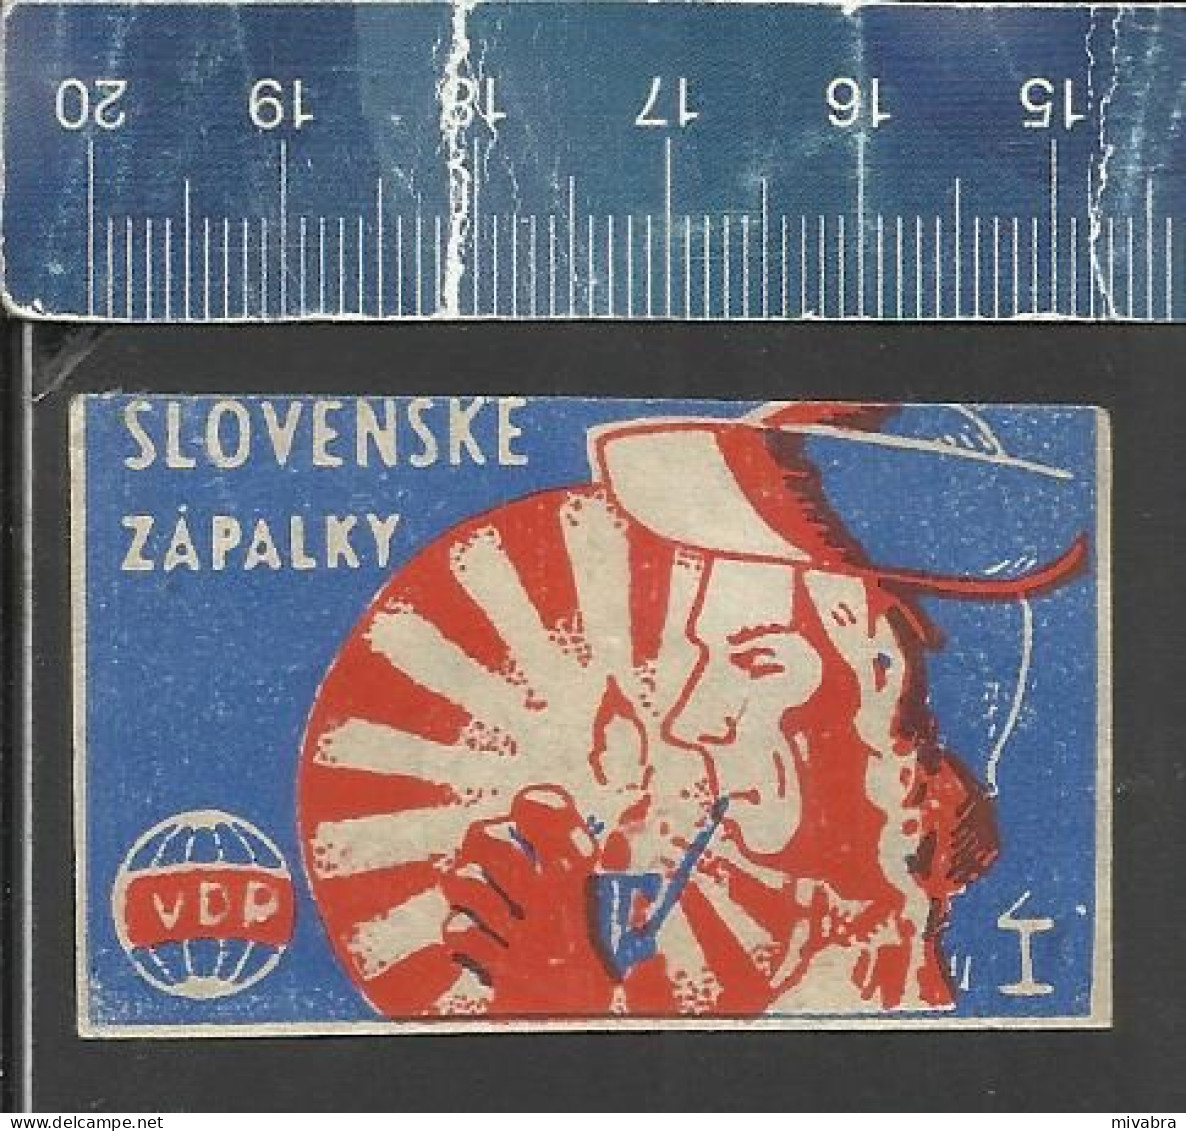 SLOVENSKE ZAPALKY VDP I ( MAN LICHTING A PIPE ) - OLD VINTAGE CZECHOSLOVAKIAN MATCHBOX LABEL - Luciferdozen - Etiketten